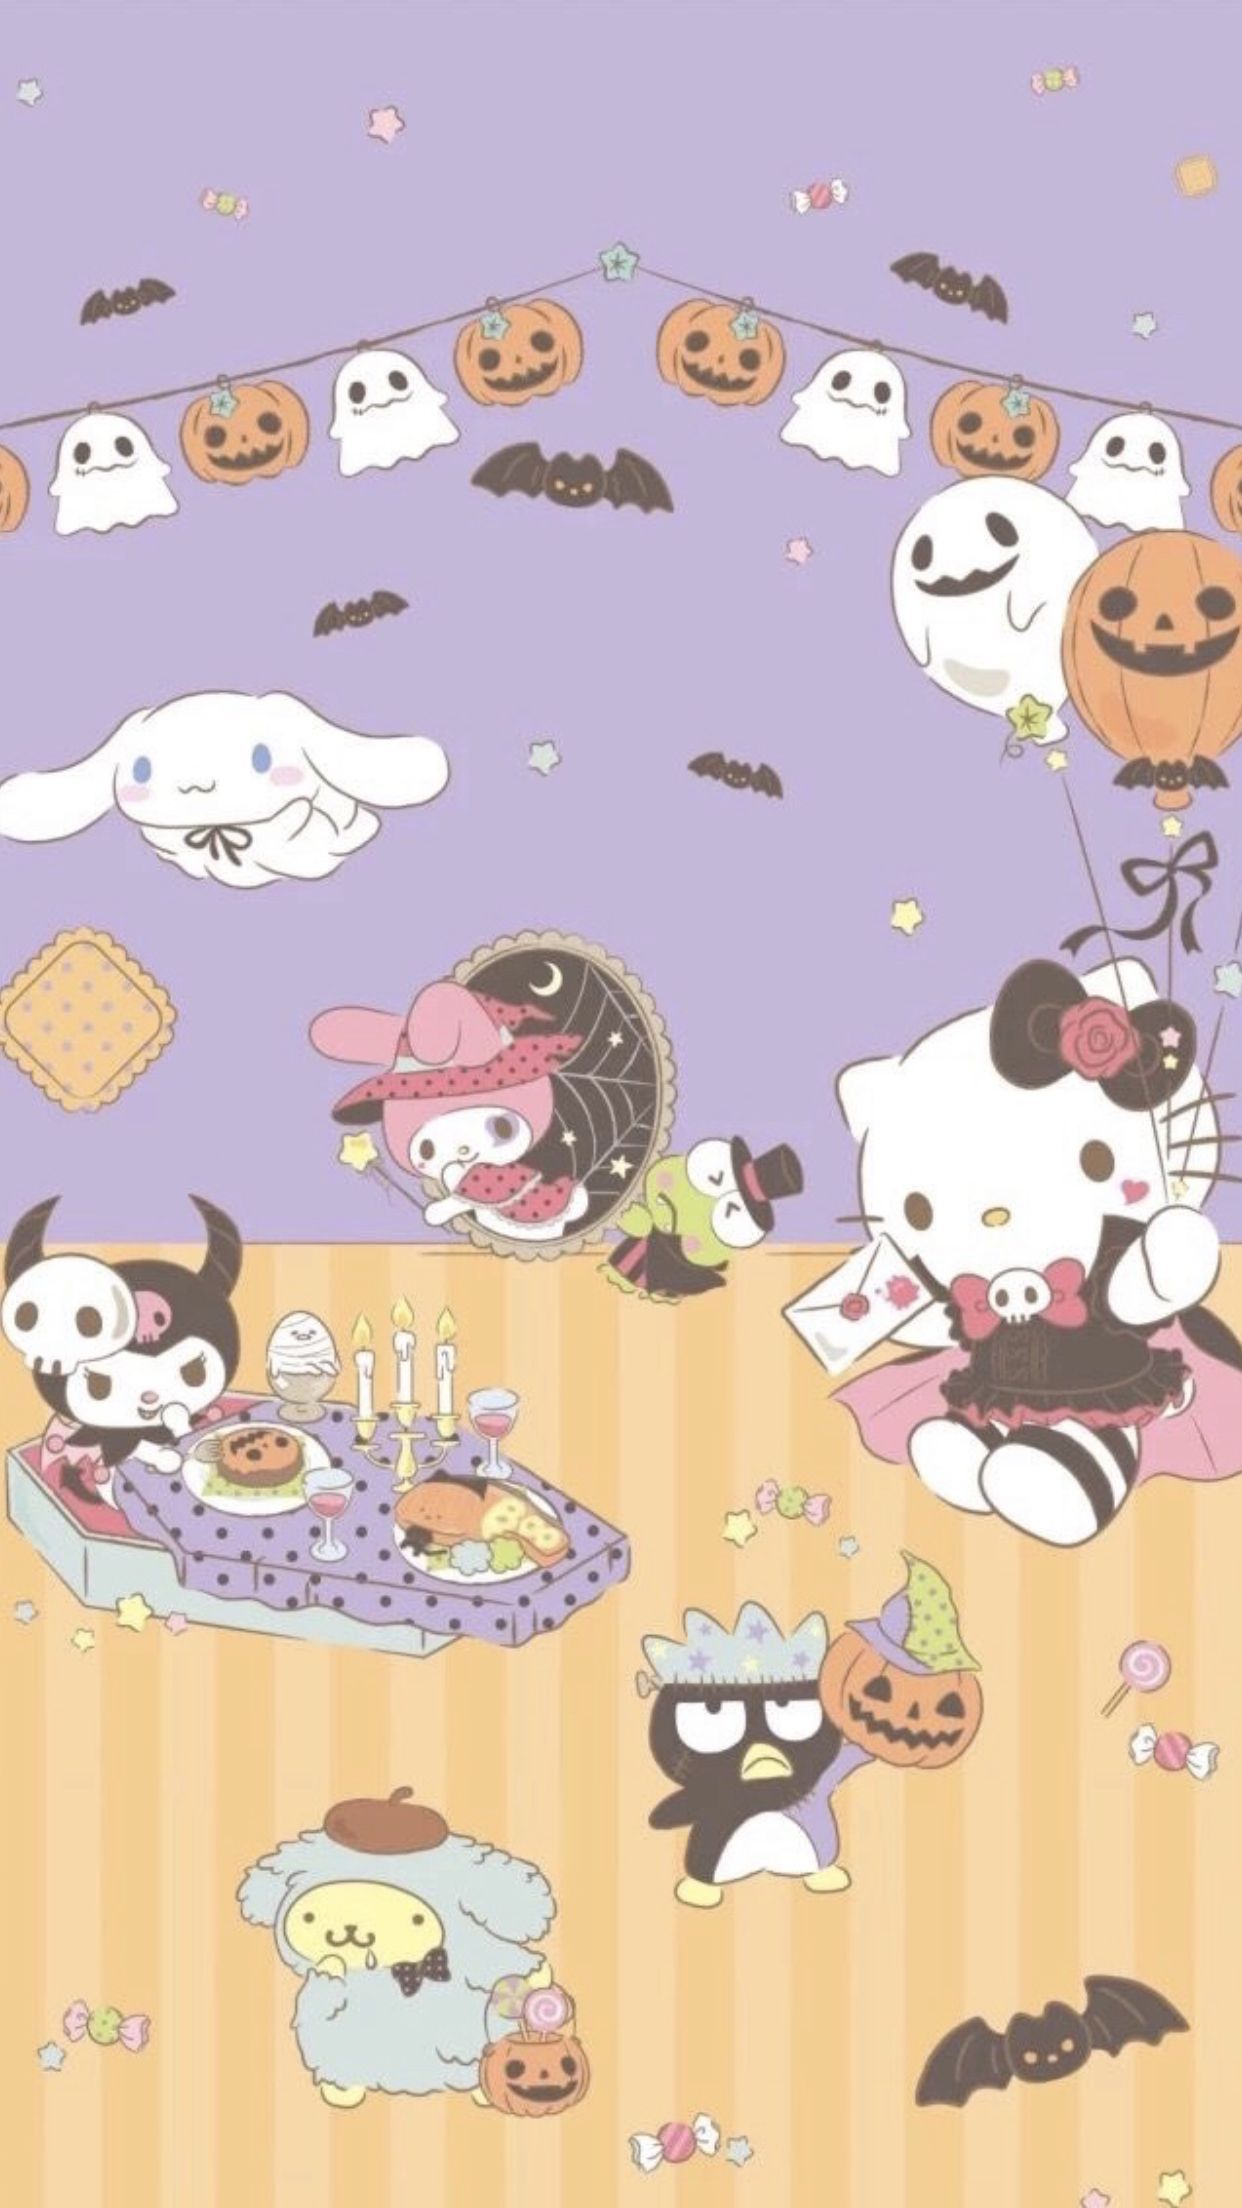 Pastel Aesthetic Halloween Wallpapers - Wallpaper Cave